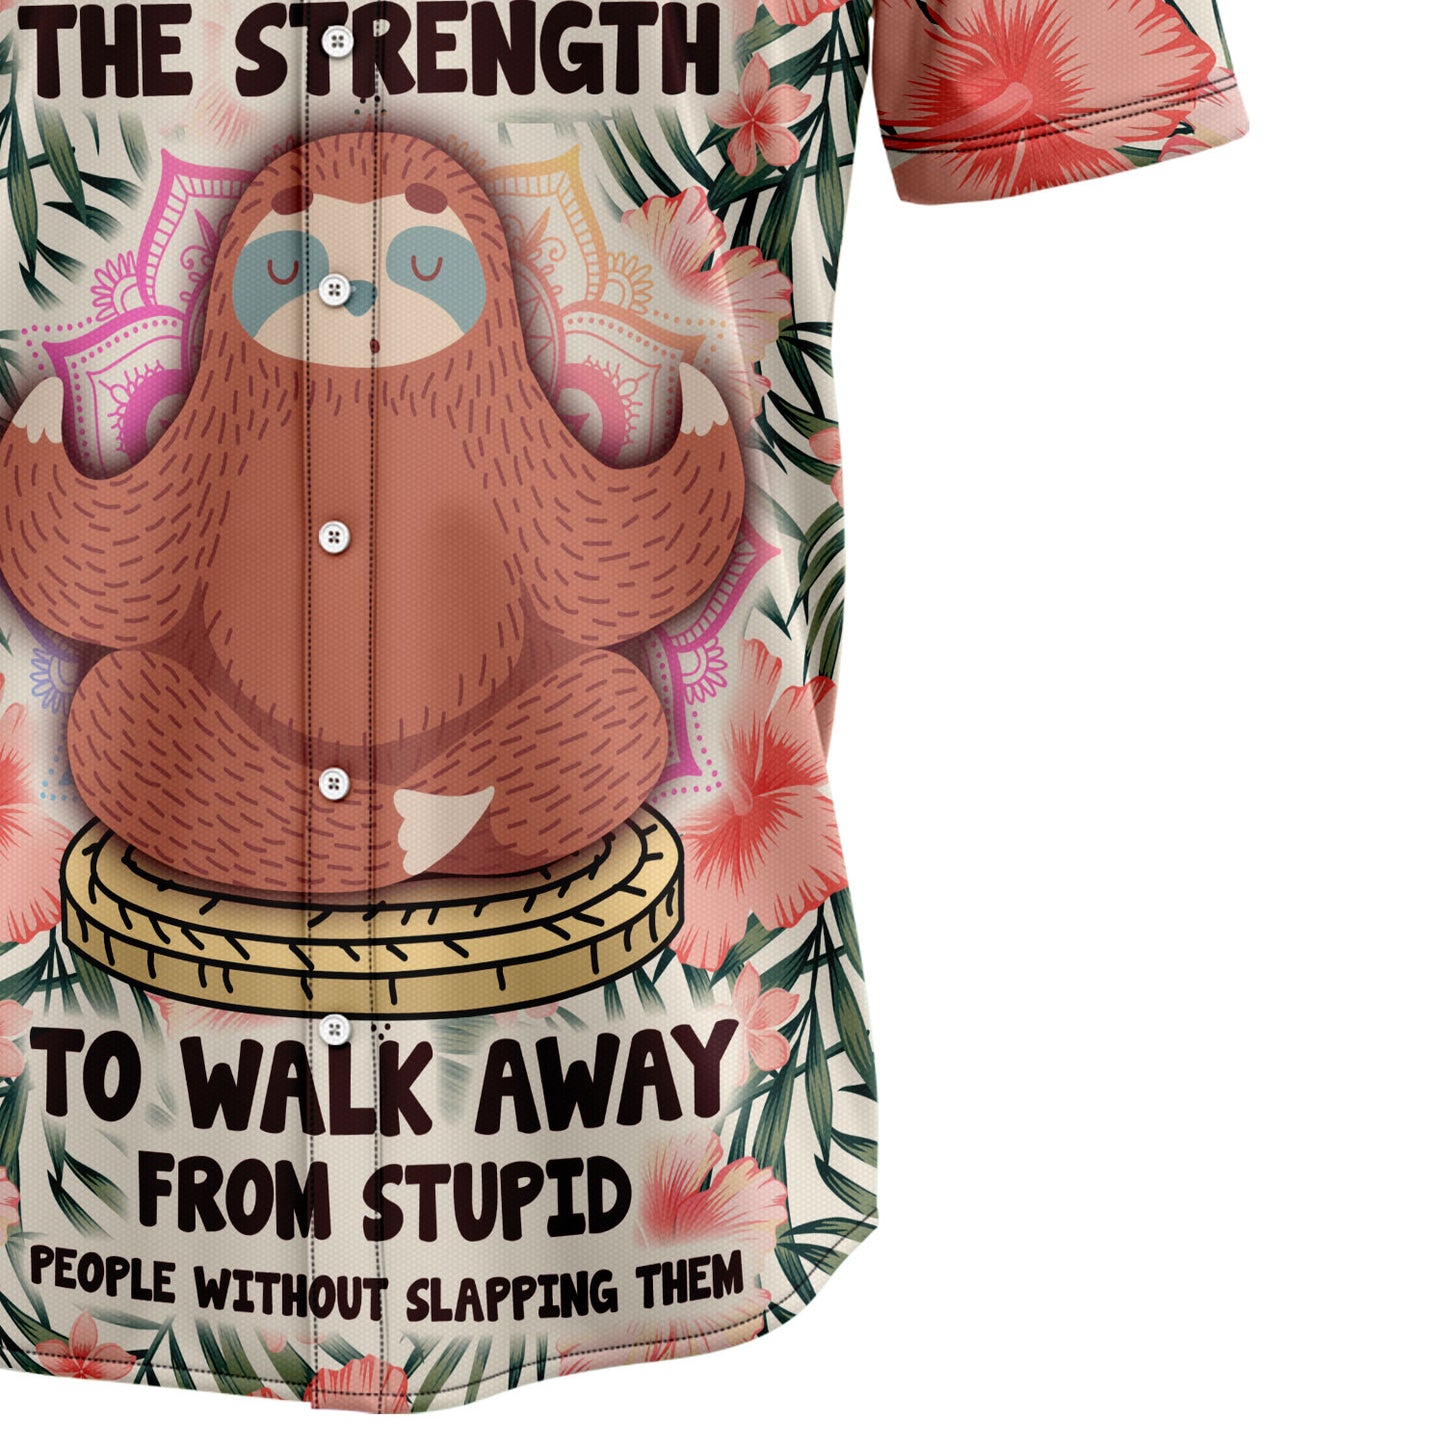 Give Me The Strength To Walk Away From Stupid People Sloth H237004 Hawaiian Shirt